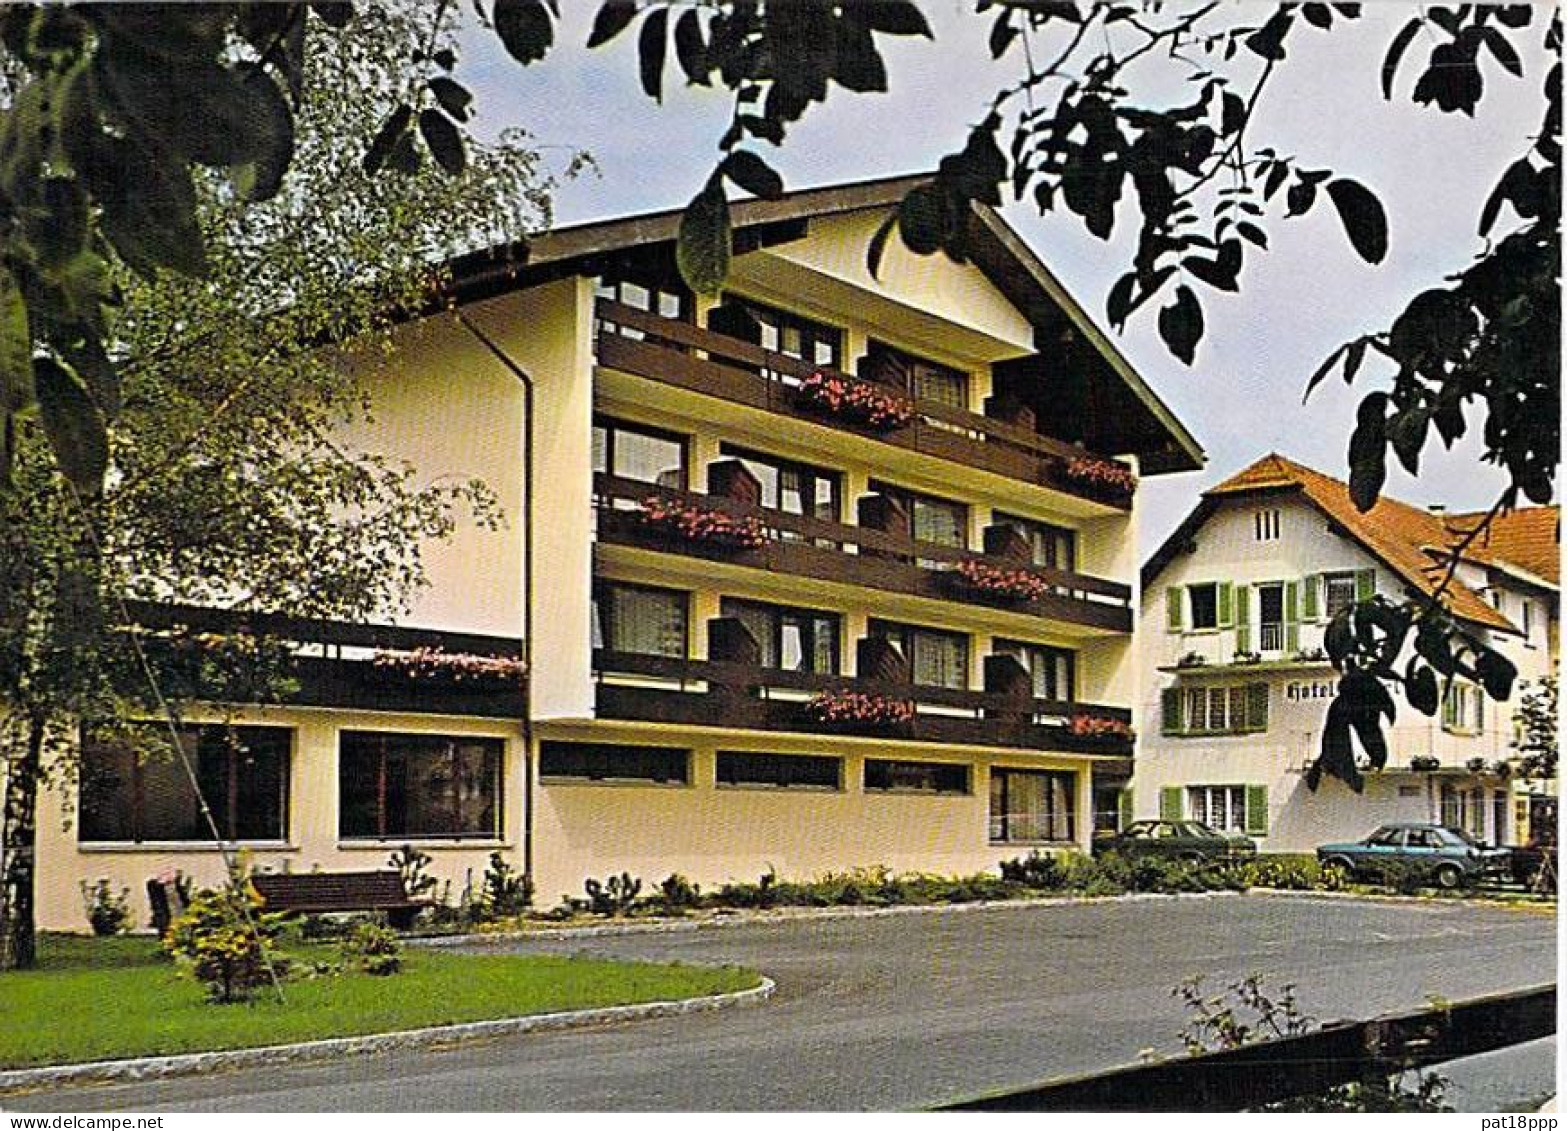 ÖSTERREICH Autriche - Lot de 35 CPSM GF HOTEL RESTAURANT : 7 LANDS hors TIROL Tyrol  Austria Oostenrijk